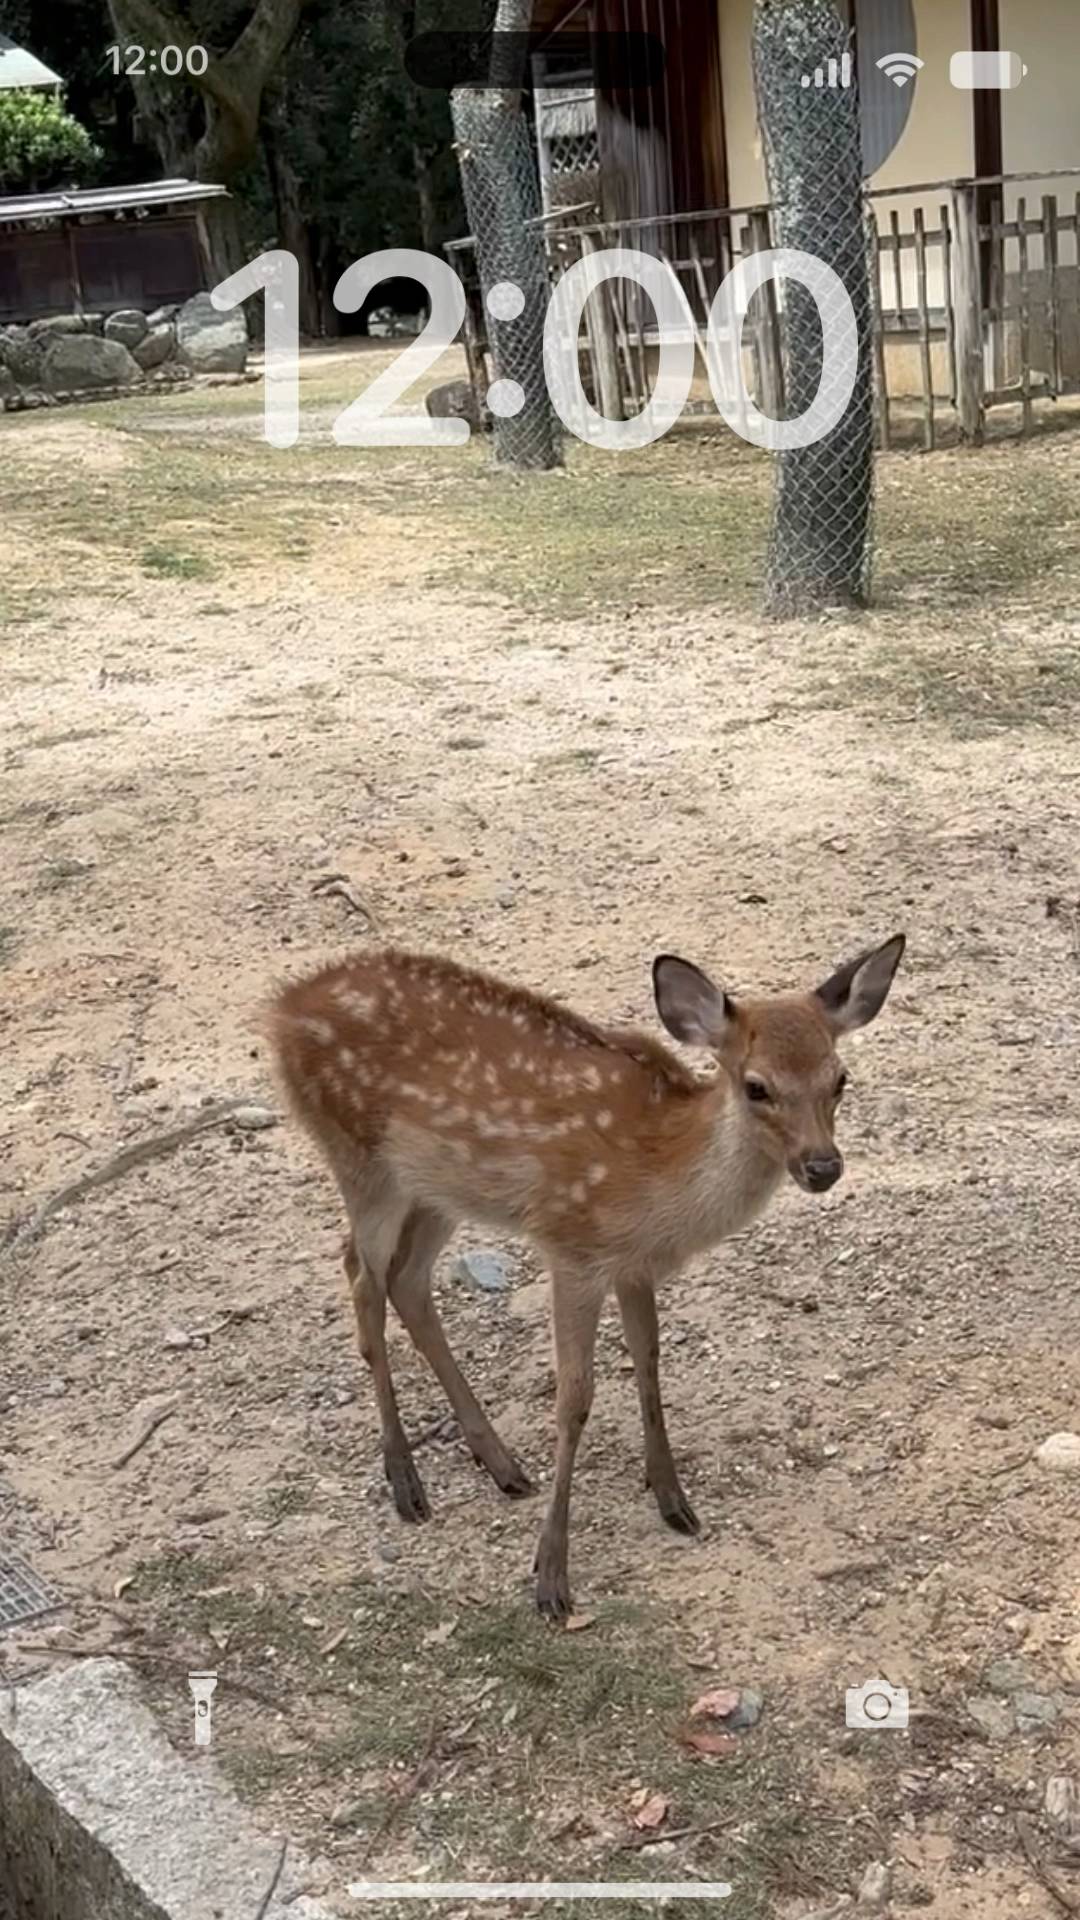 Nara cute deer 🦌🍁 Hình nền sống[ltE2WDsbyYP7yruGvDEu]